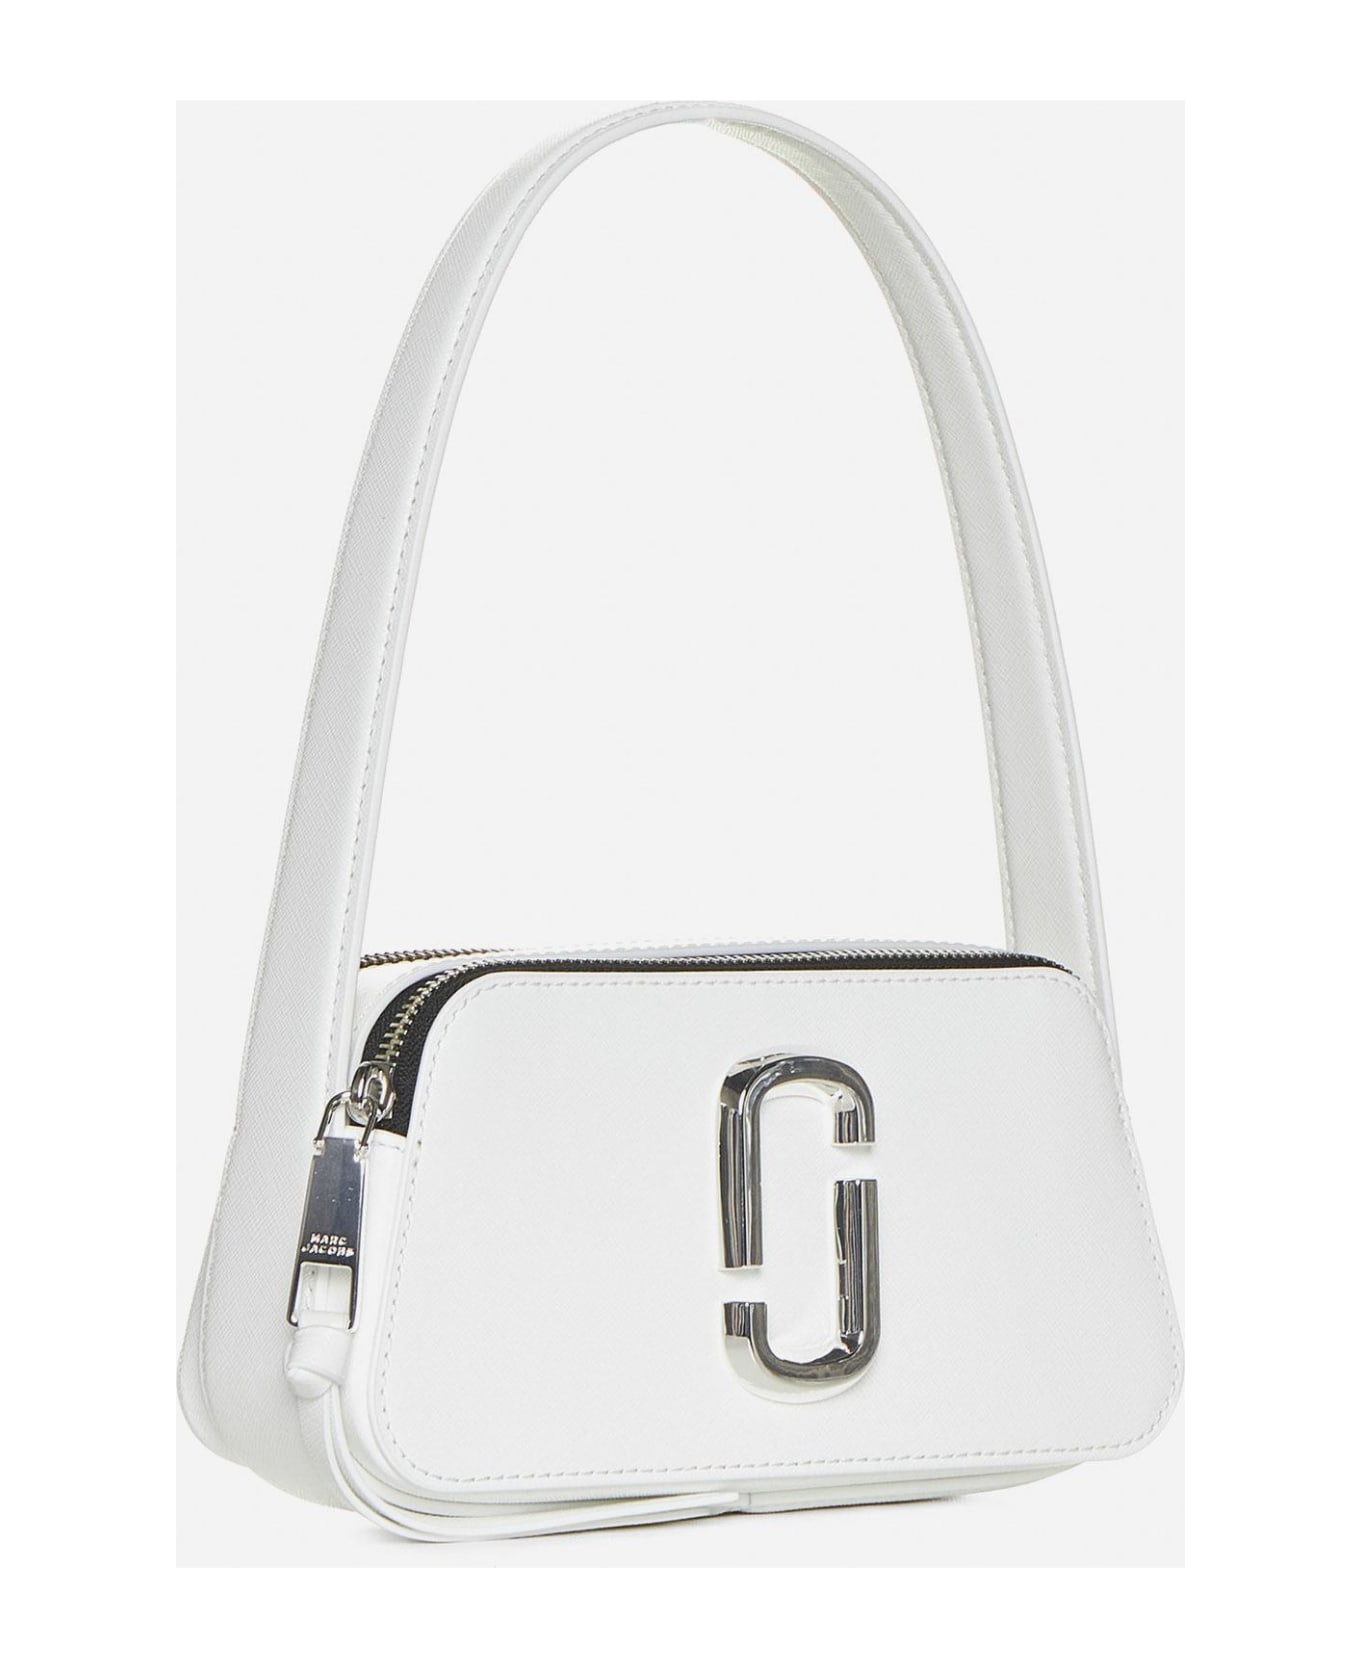 Marc Jacobs The Slingshot Leather Bag - White